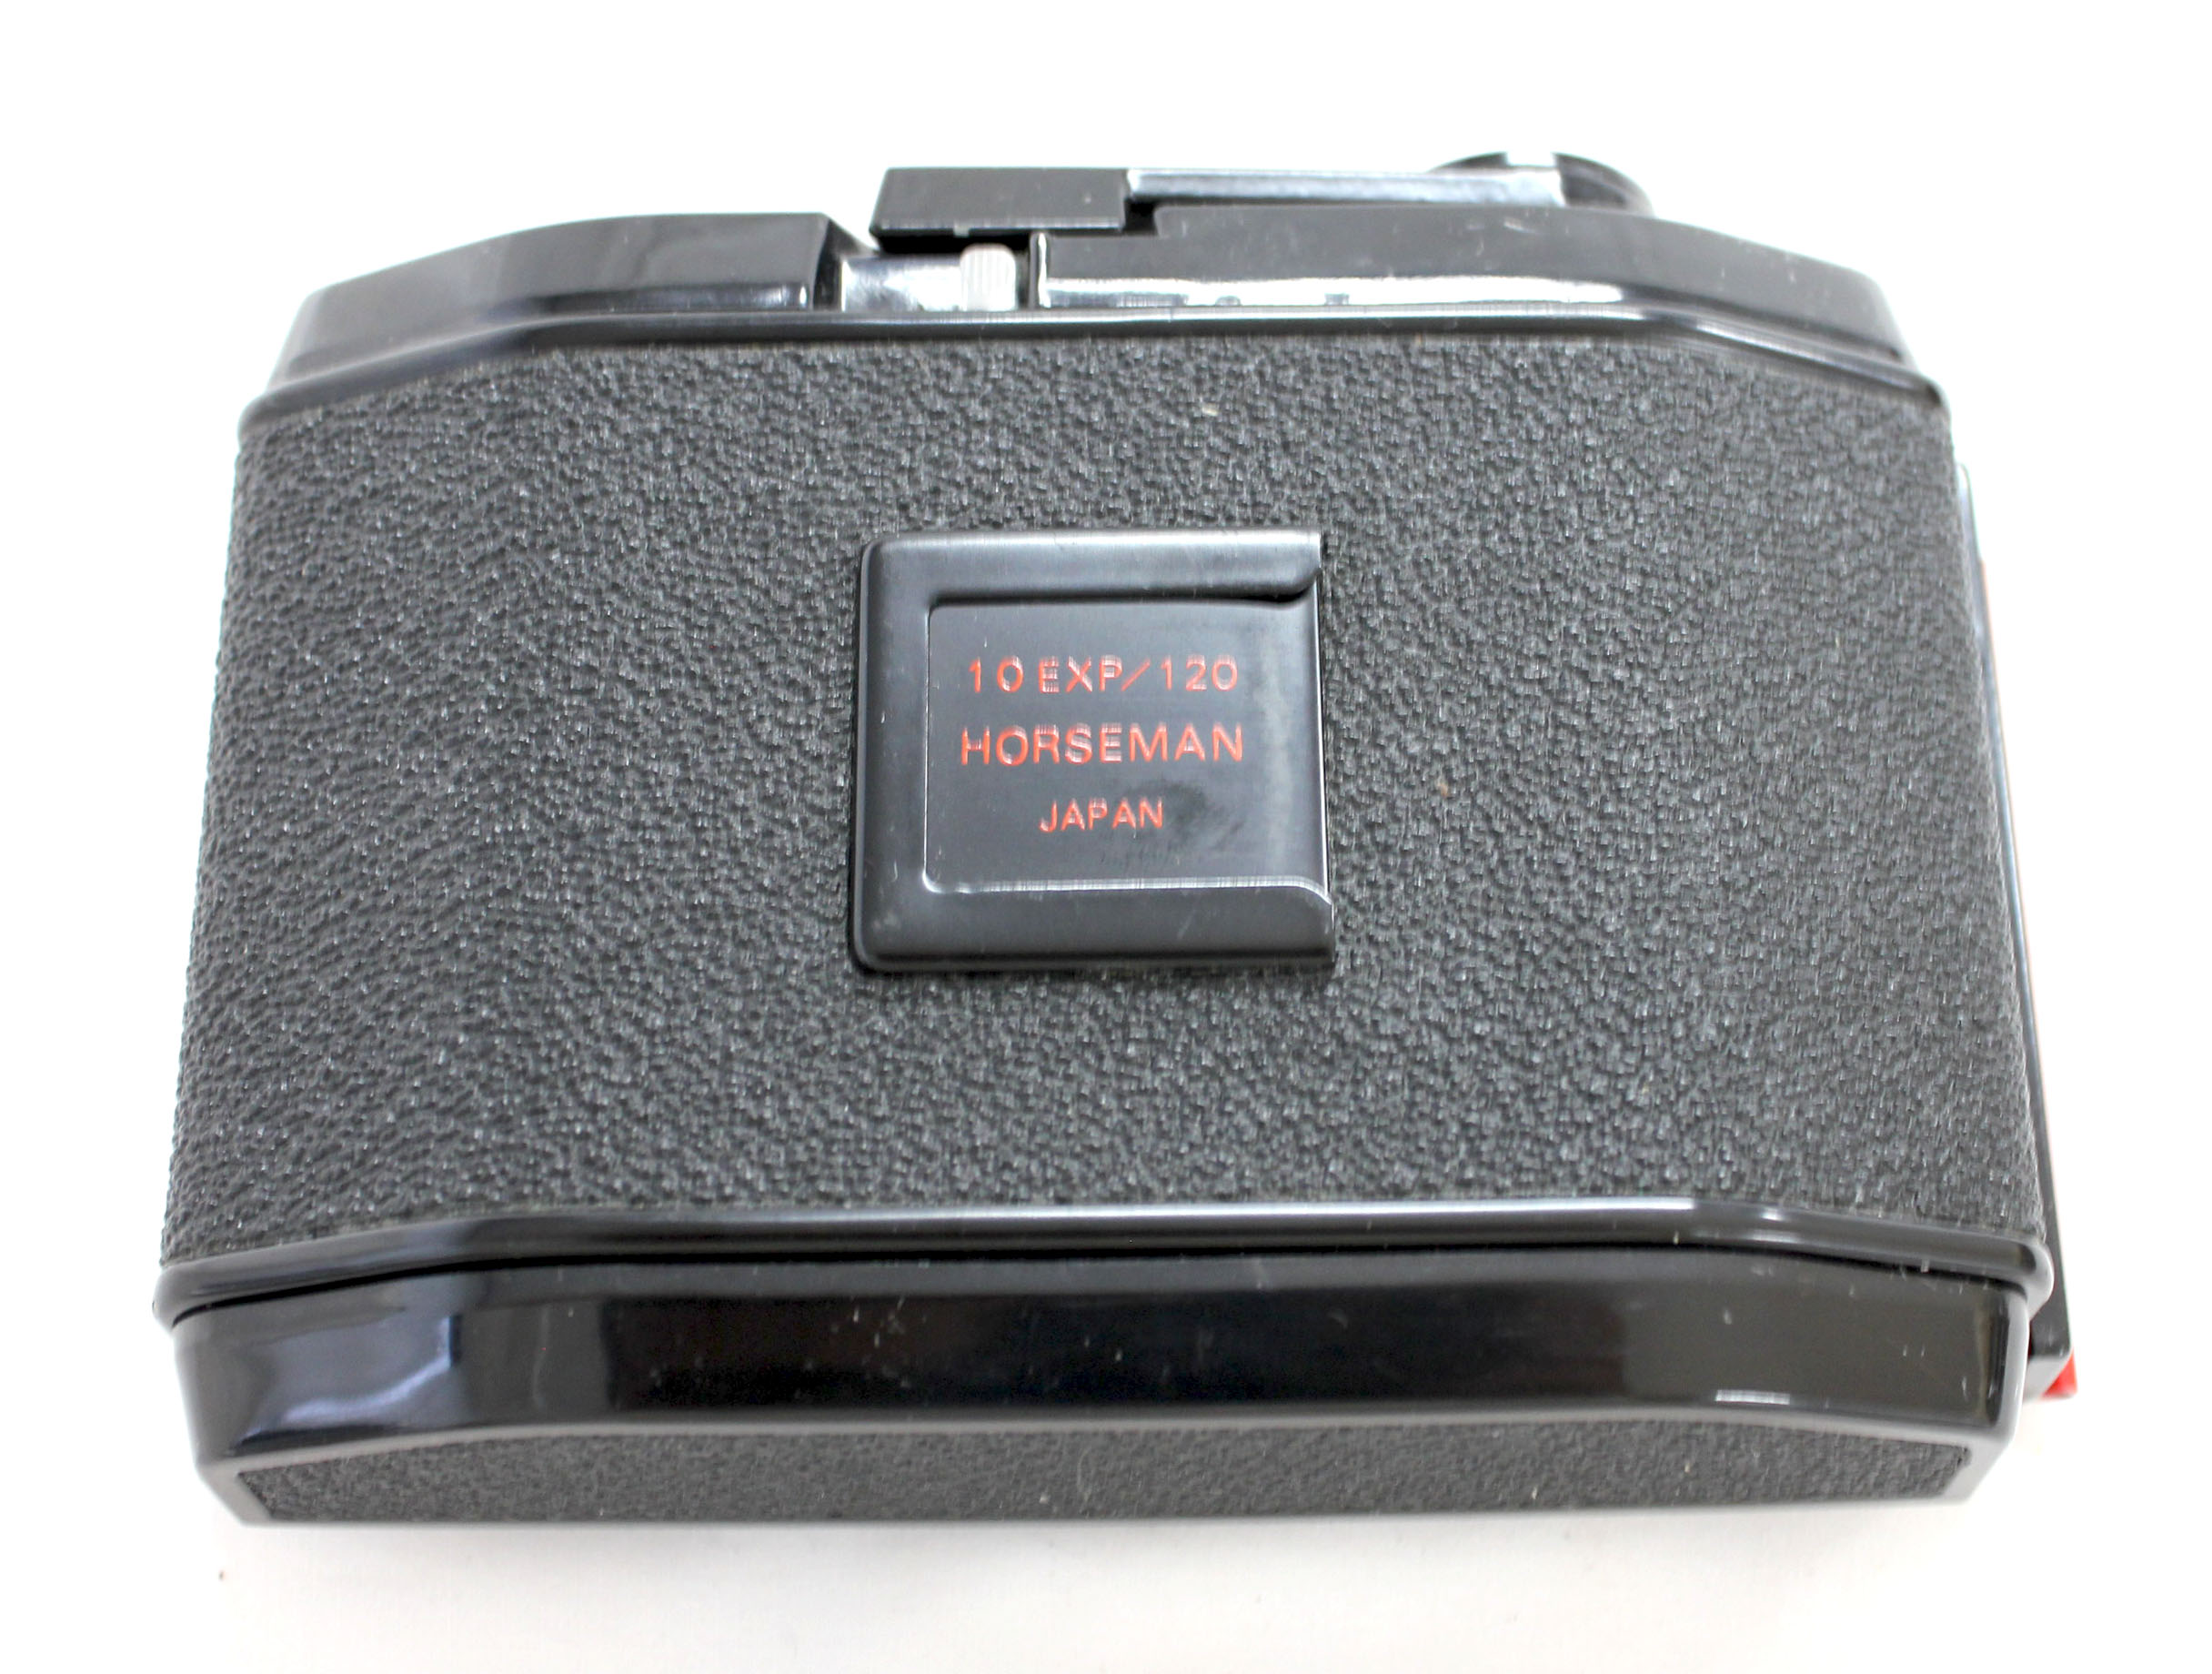 Japan Used Camera Shop | Horseman 10EXP/120 6x7 Roll Film Back Holder for VH, VH-R, 985, 980, 970 from Japan